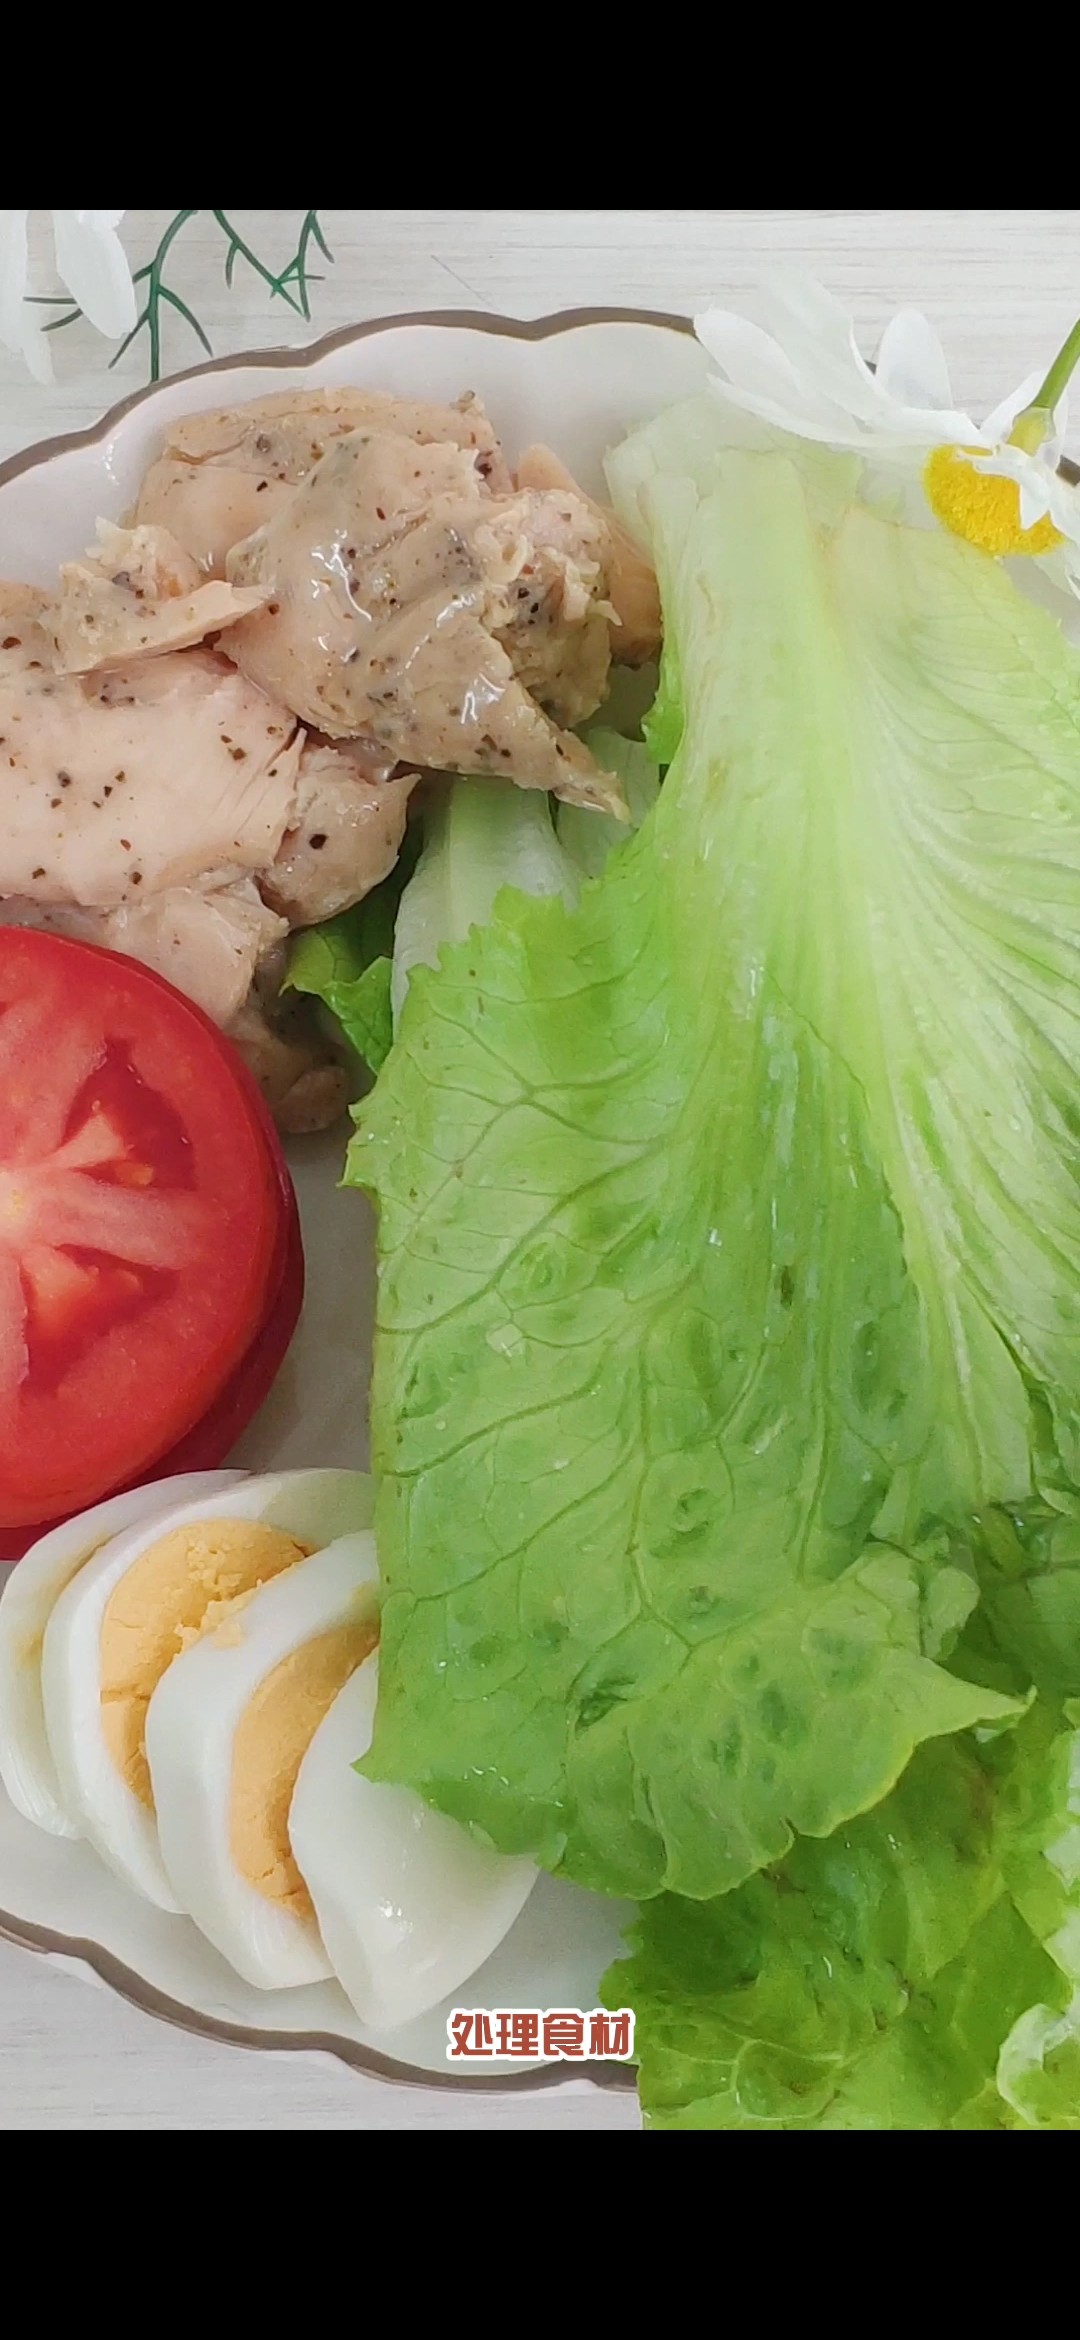 Lettuce Sandwich, Low-fat, Low-sugar and Low-calorie recipe